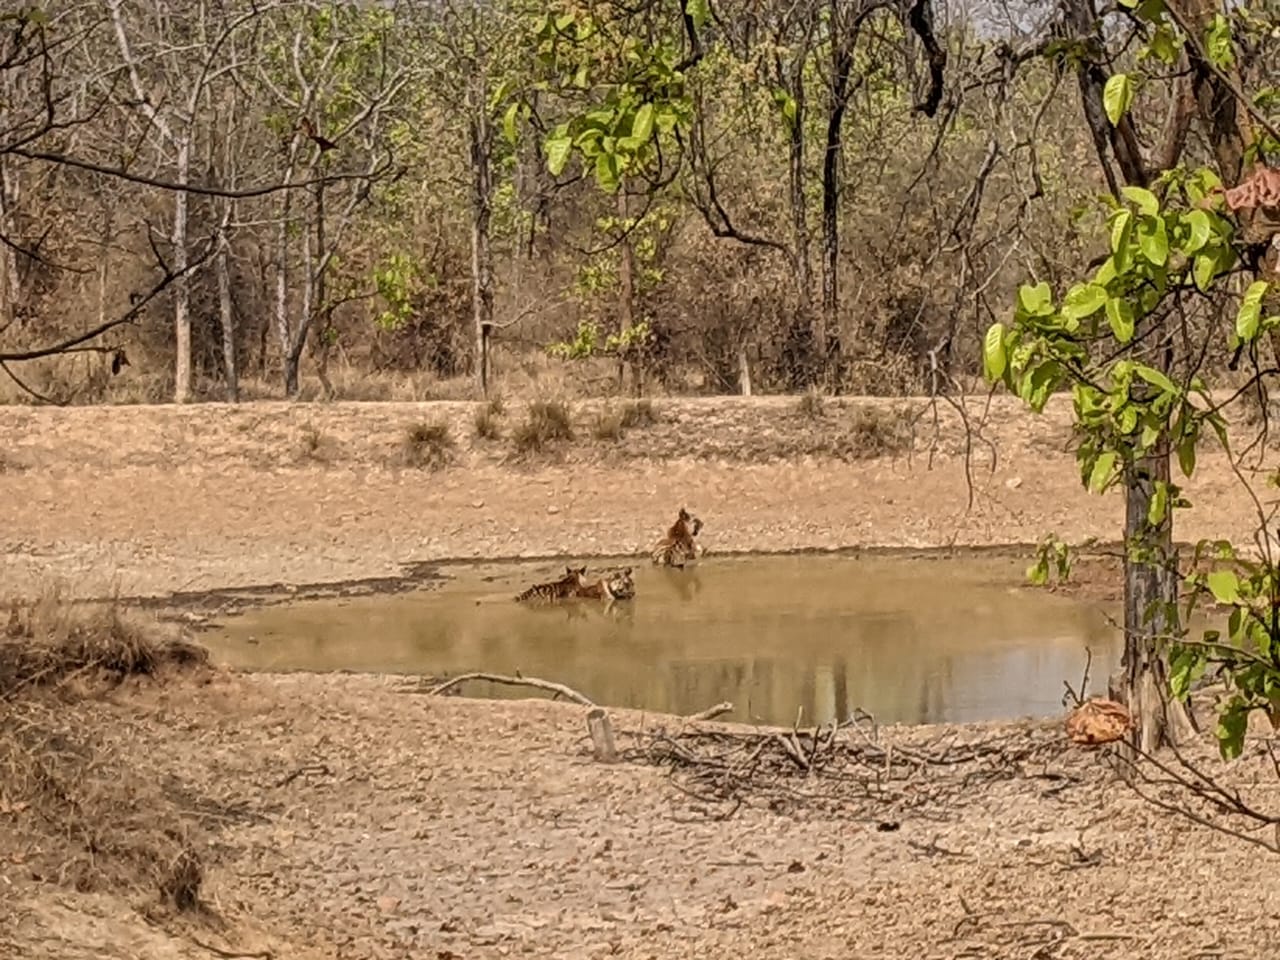 Spotting tigers at Bandhavgarh National Park